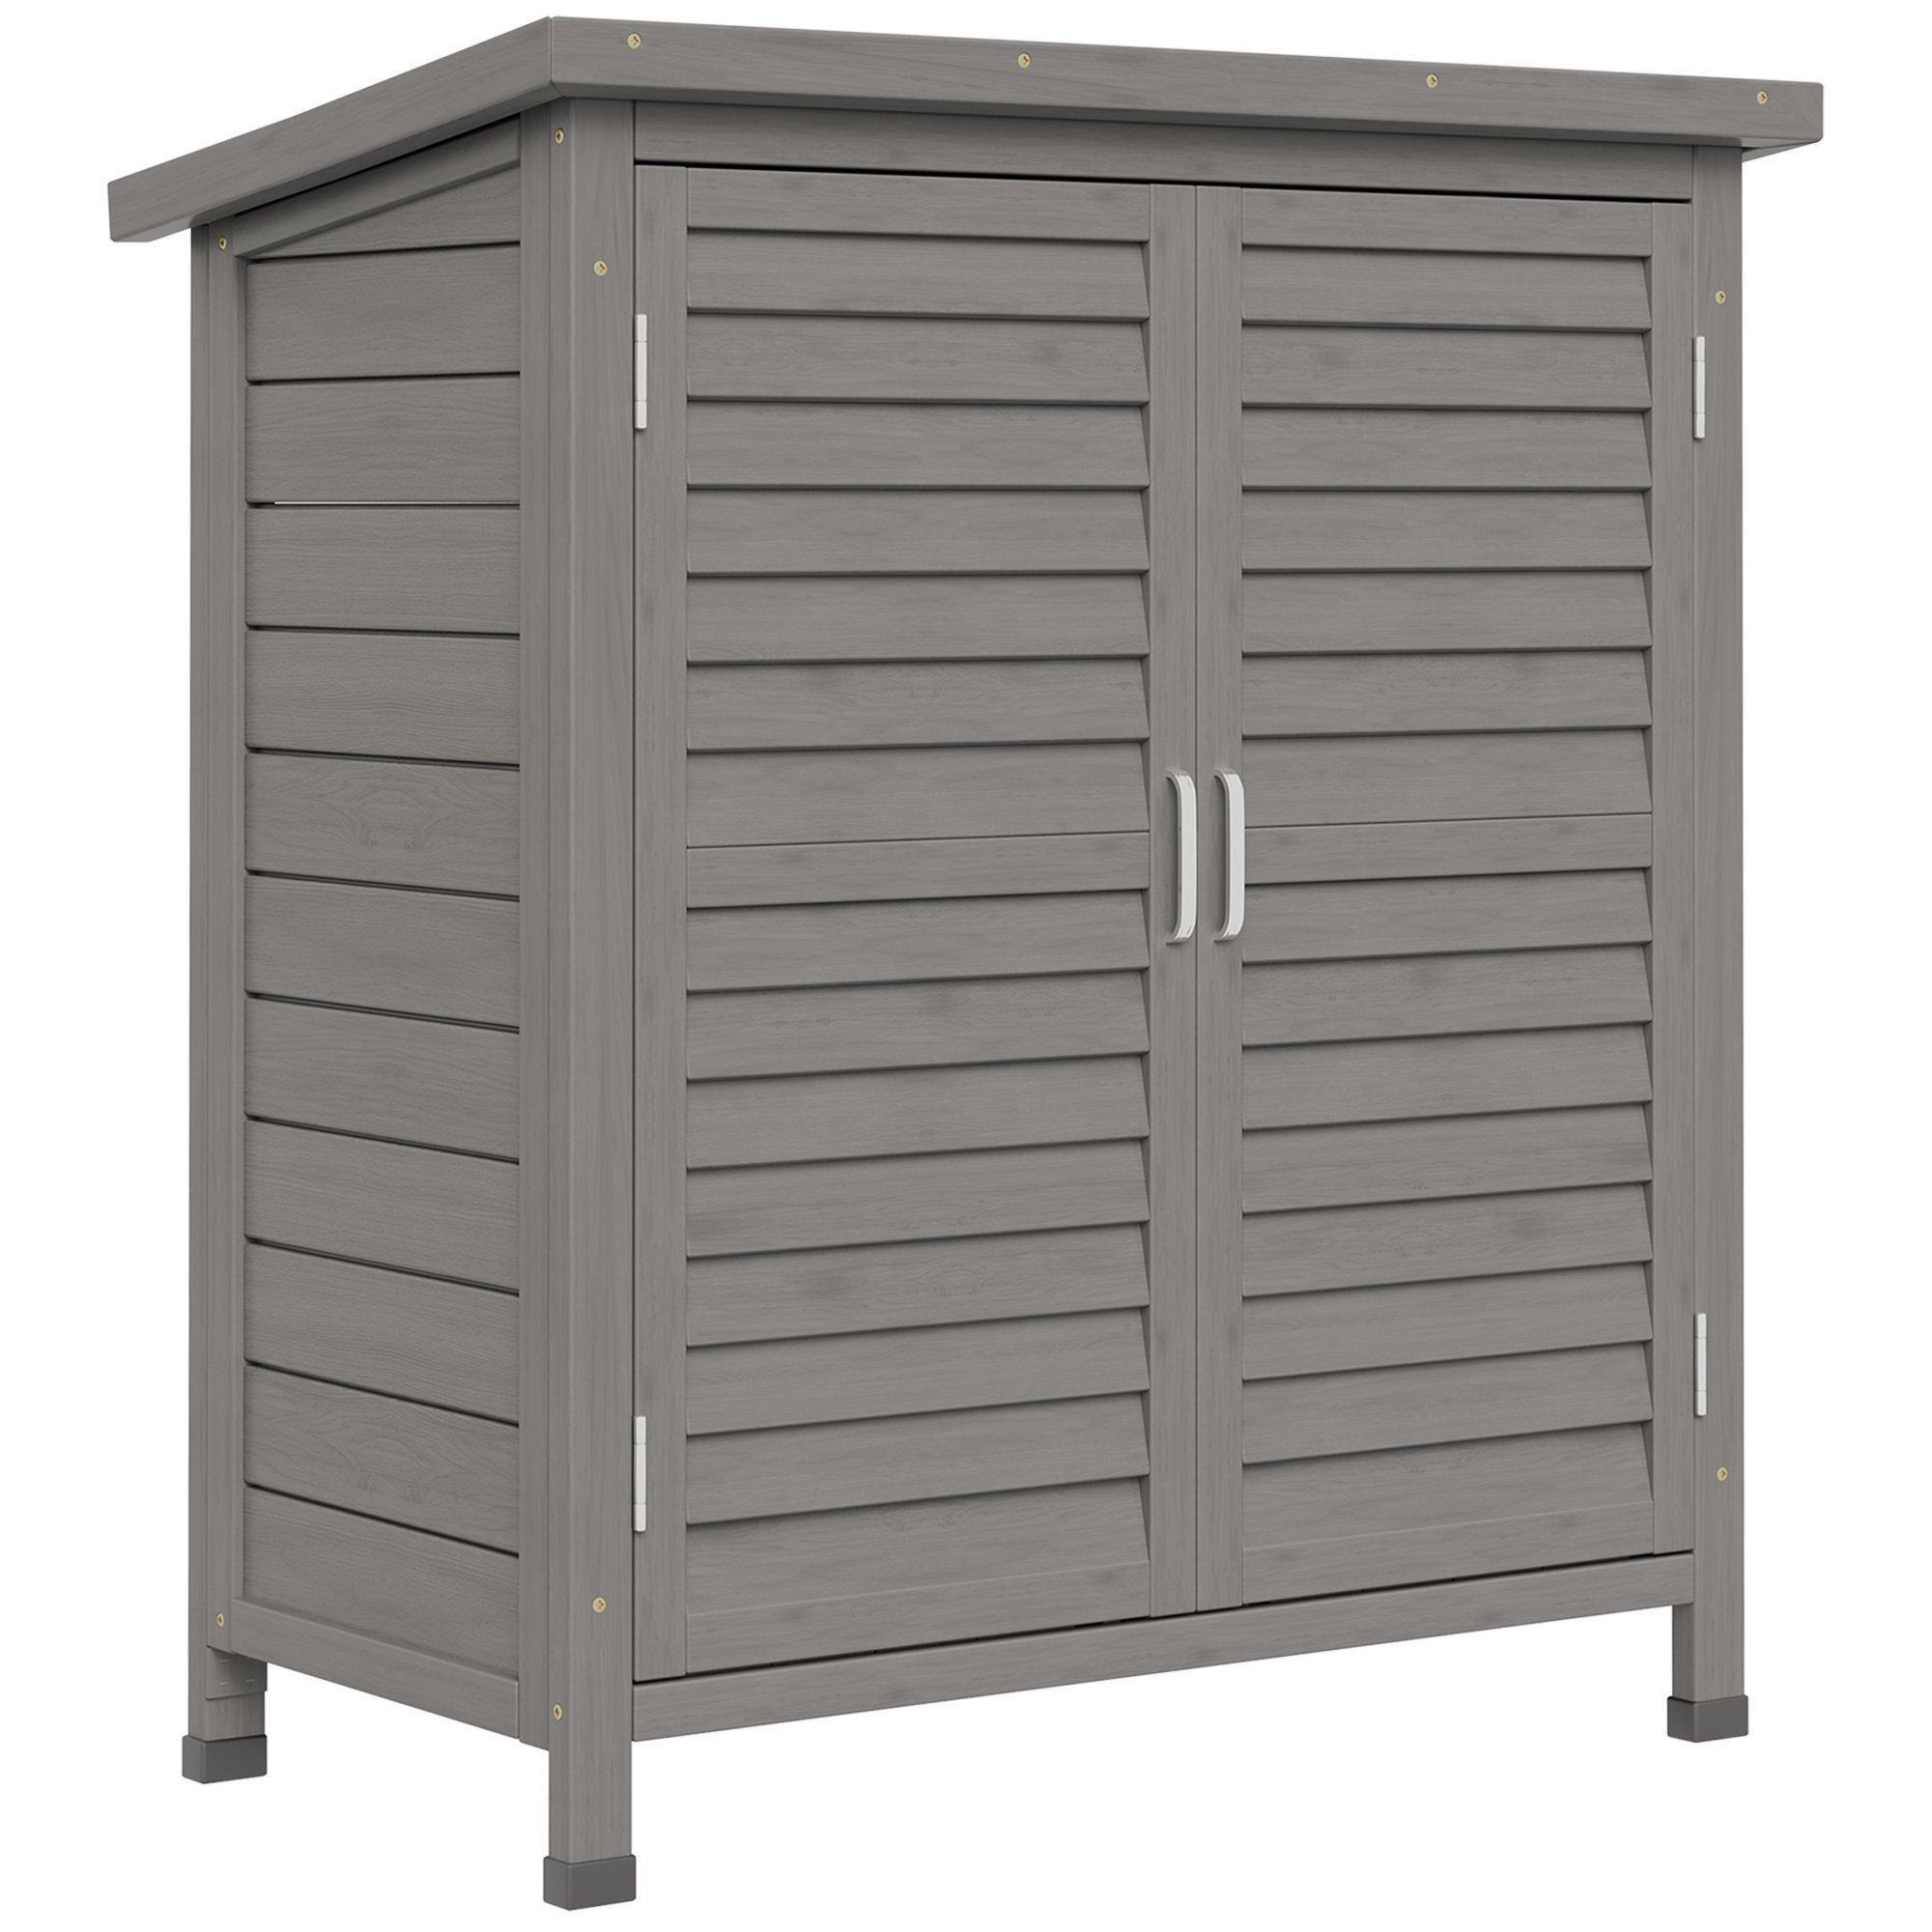 Garden Storage Shed Solid Fir Wood Garage Organisation w/ Doors - image 1